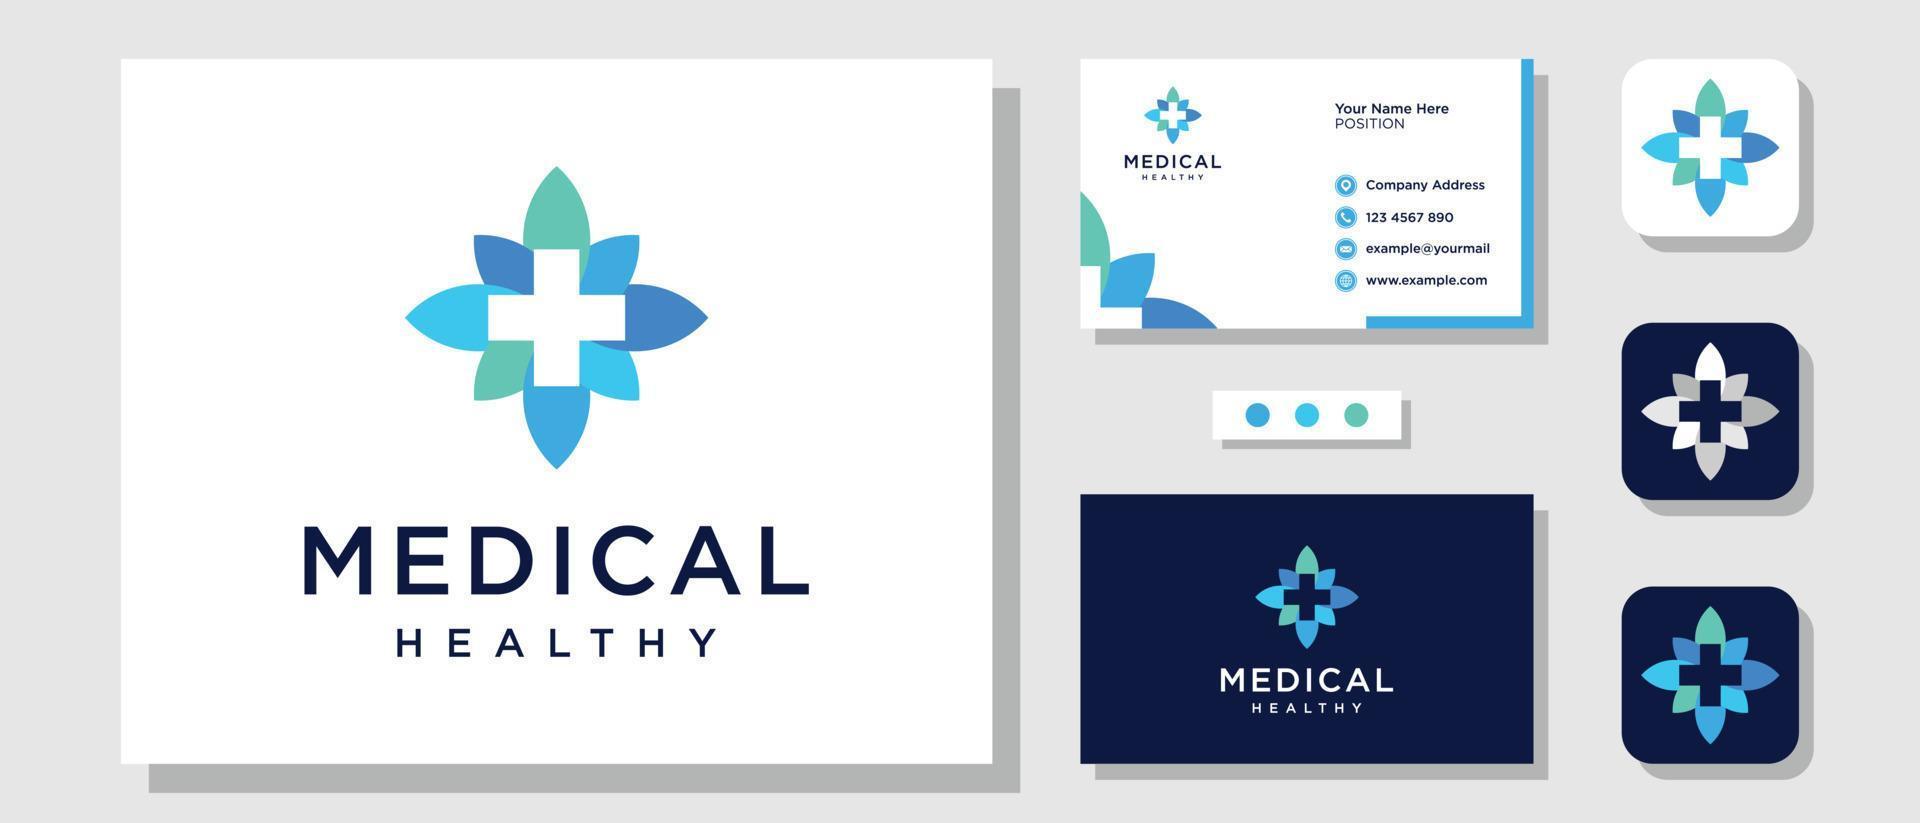 Medical Nature Health Medicine Leaf Hospital Logo Design with Layout Template Business Card vector